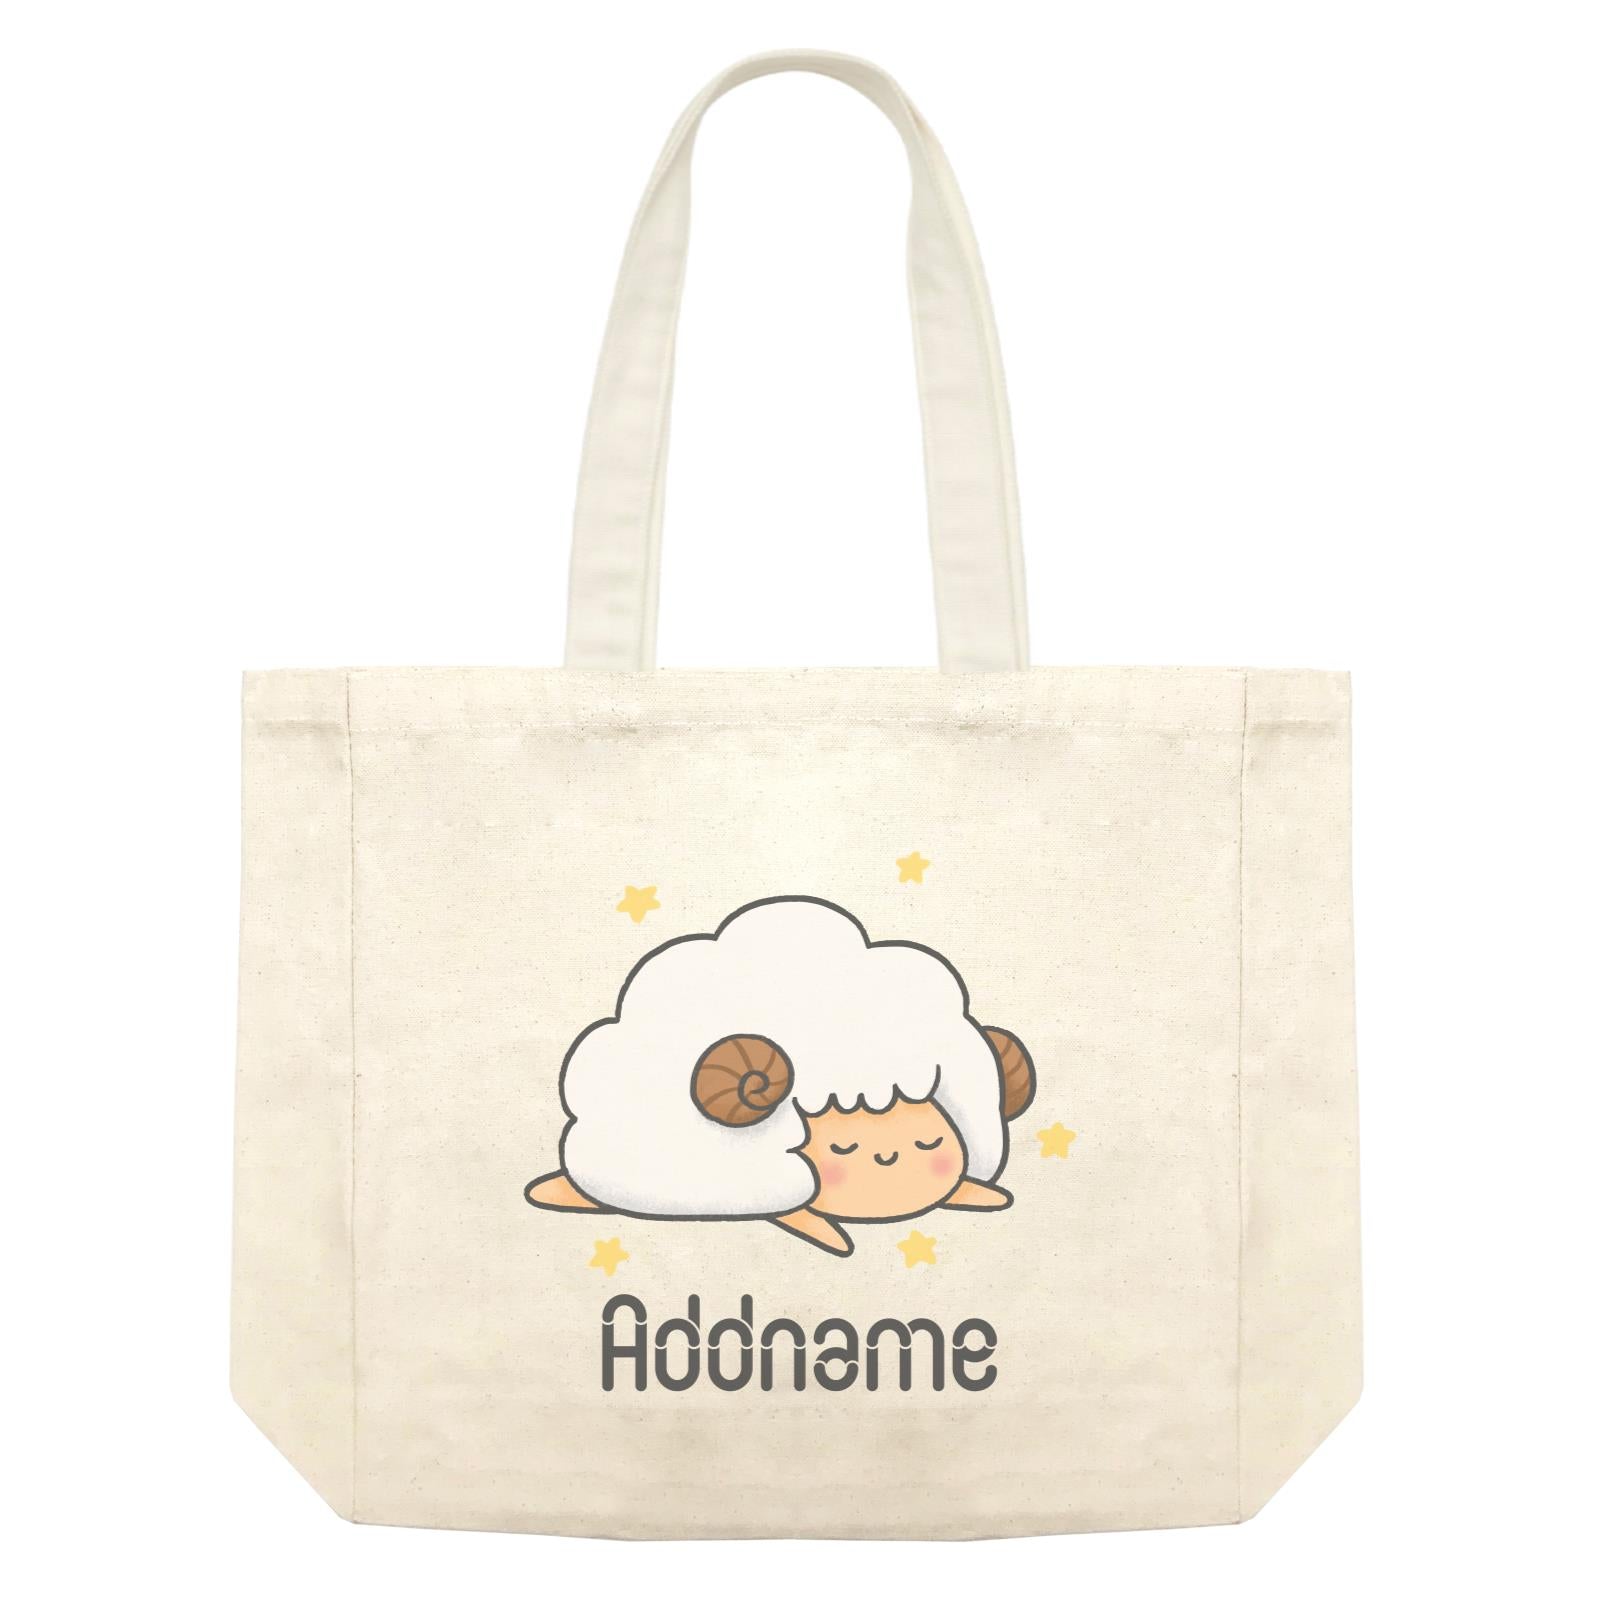 Cute Hand Drawn Style Sheep Addname Shopping Bag